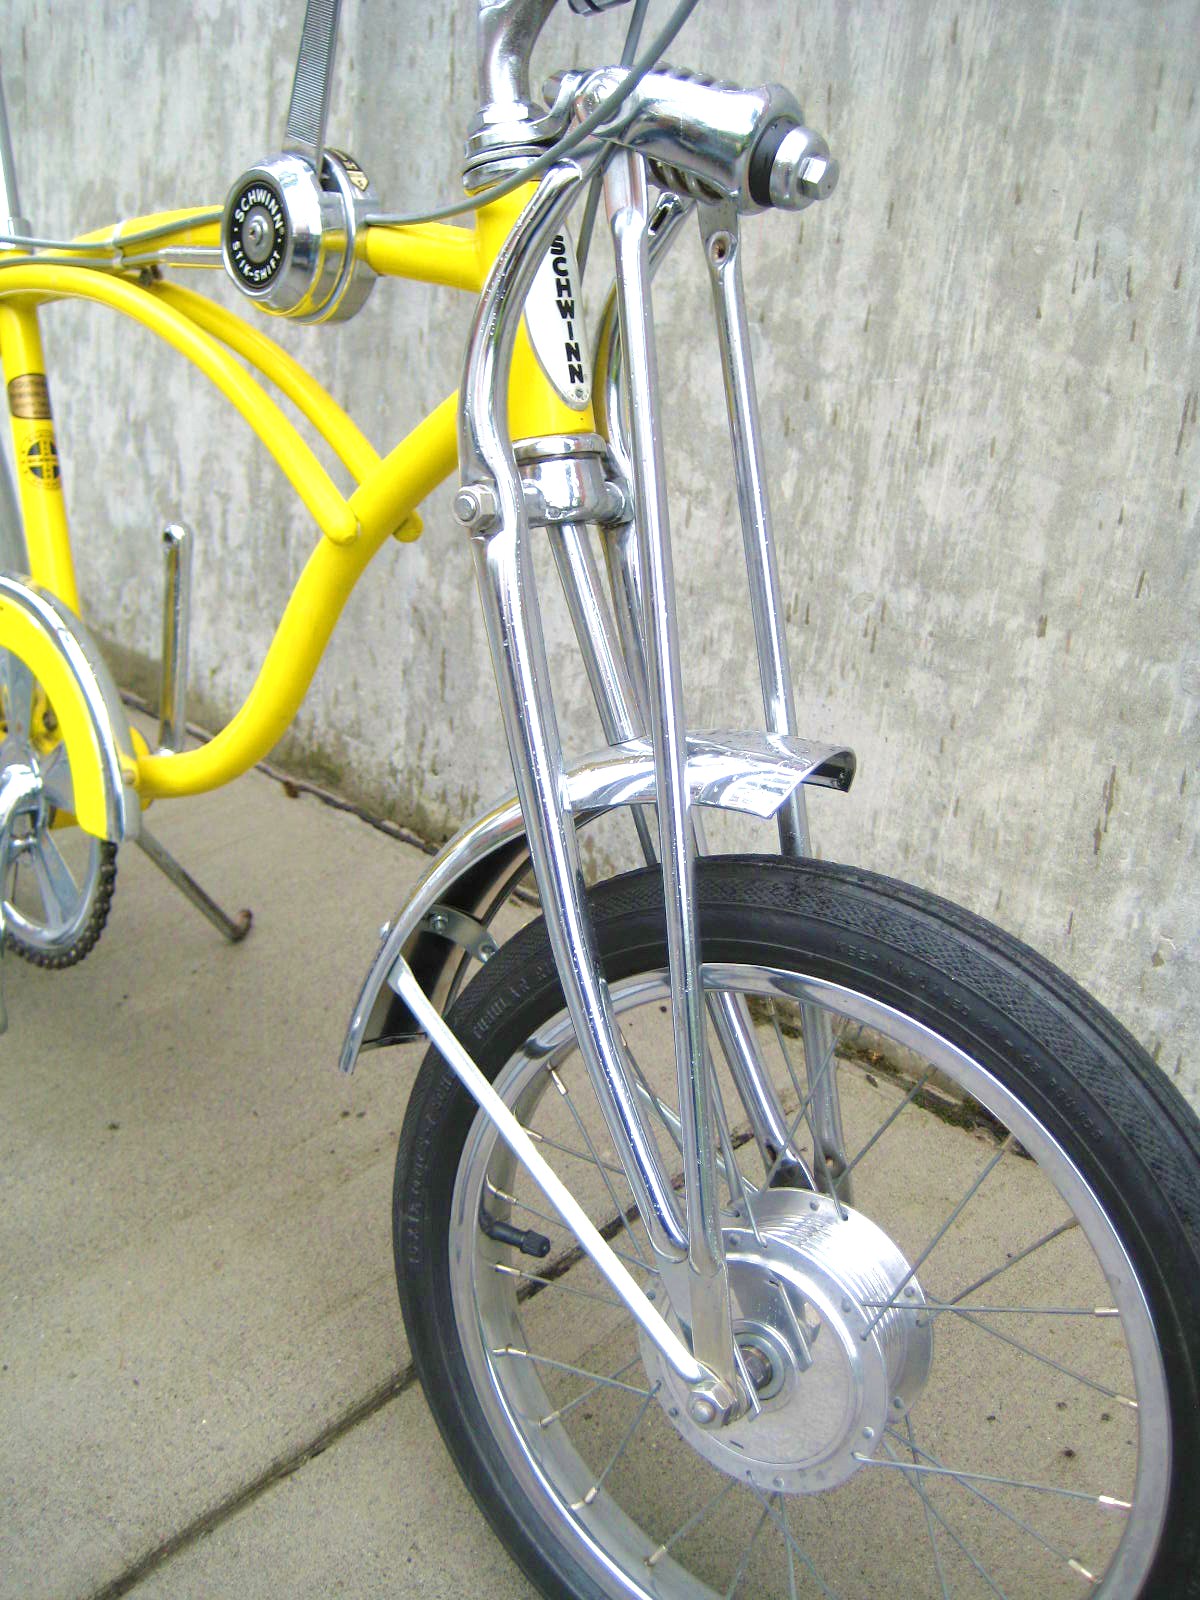 http://classiccycleus.com/home/wp-content/uploads/2011/07/Lemon-fork.jpg